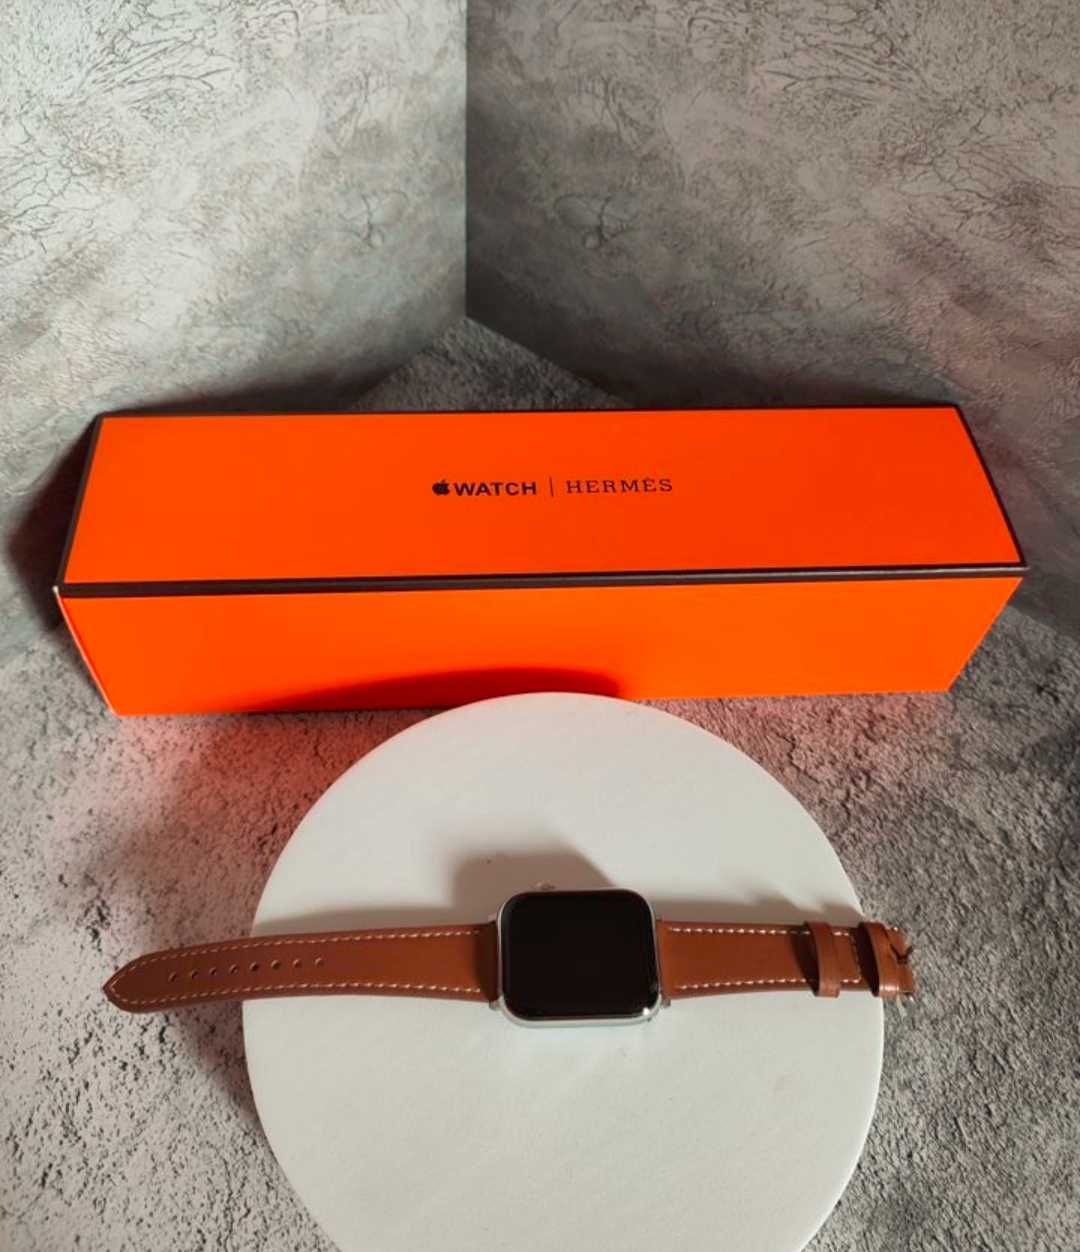 Hermes S8 41 мм Watch 1в1 LUX Смарт-часы + ремешок